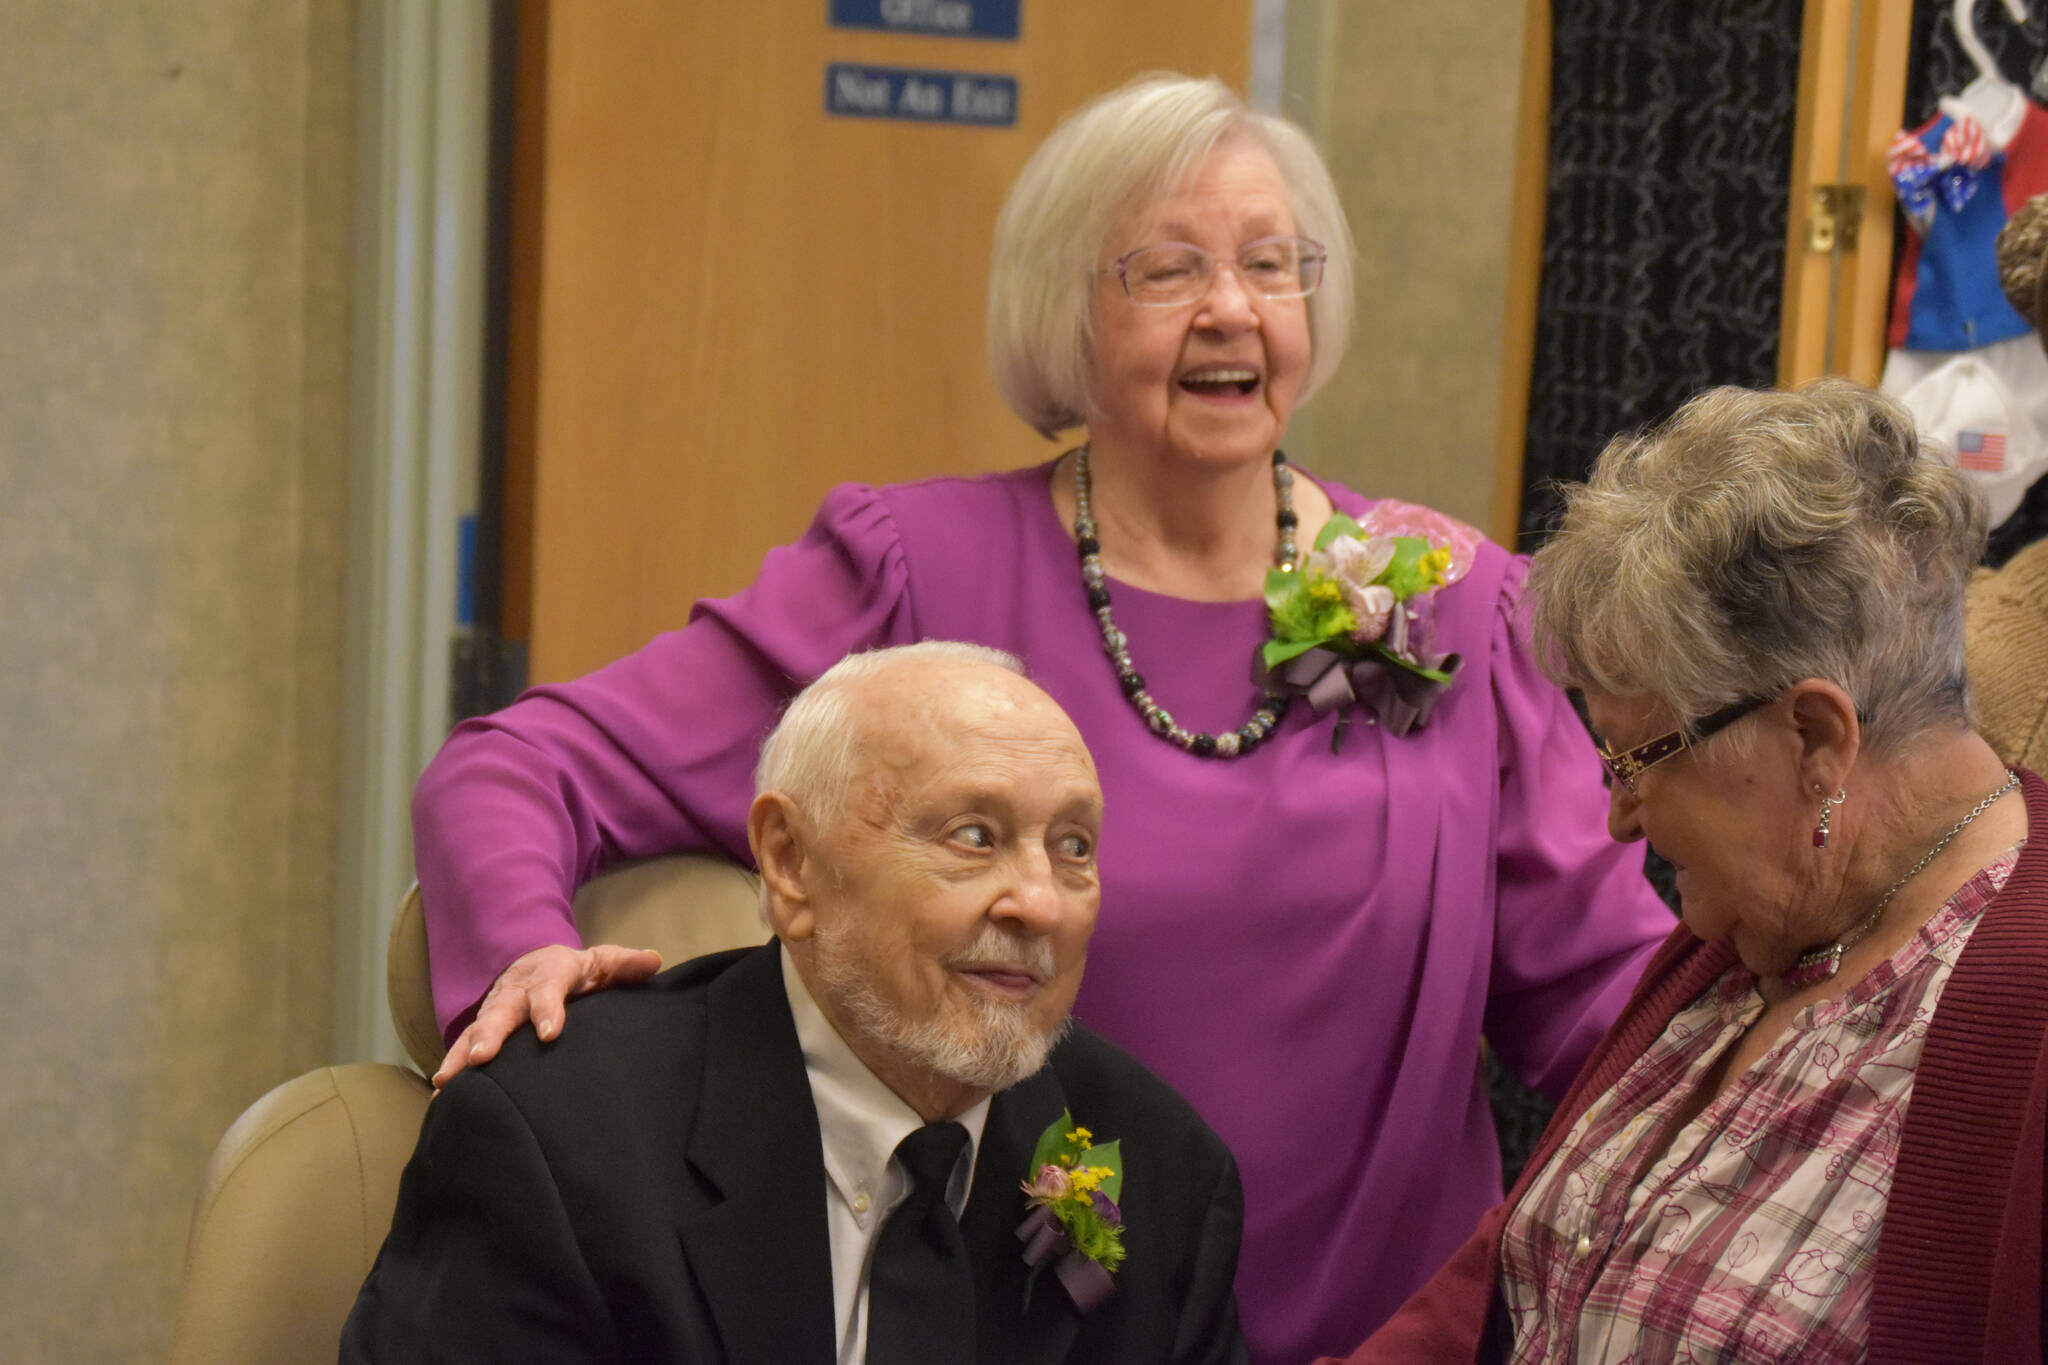 Roy and Ozella Williams chat with attendees at their 70th Wedding Anniversary celebration on Friday, Oct. 7, 2022, at the Kenai Senior Center in Kenai, Alaska. (Jake Dye/Peninsula Clarion)